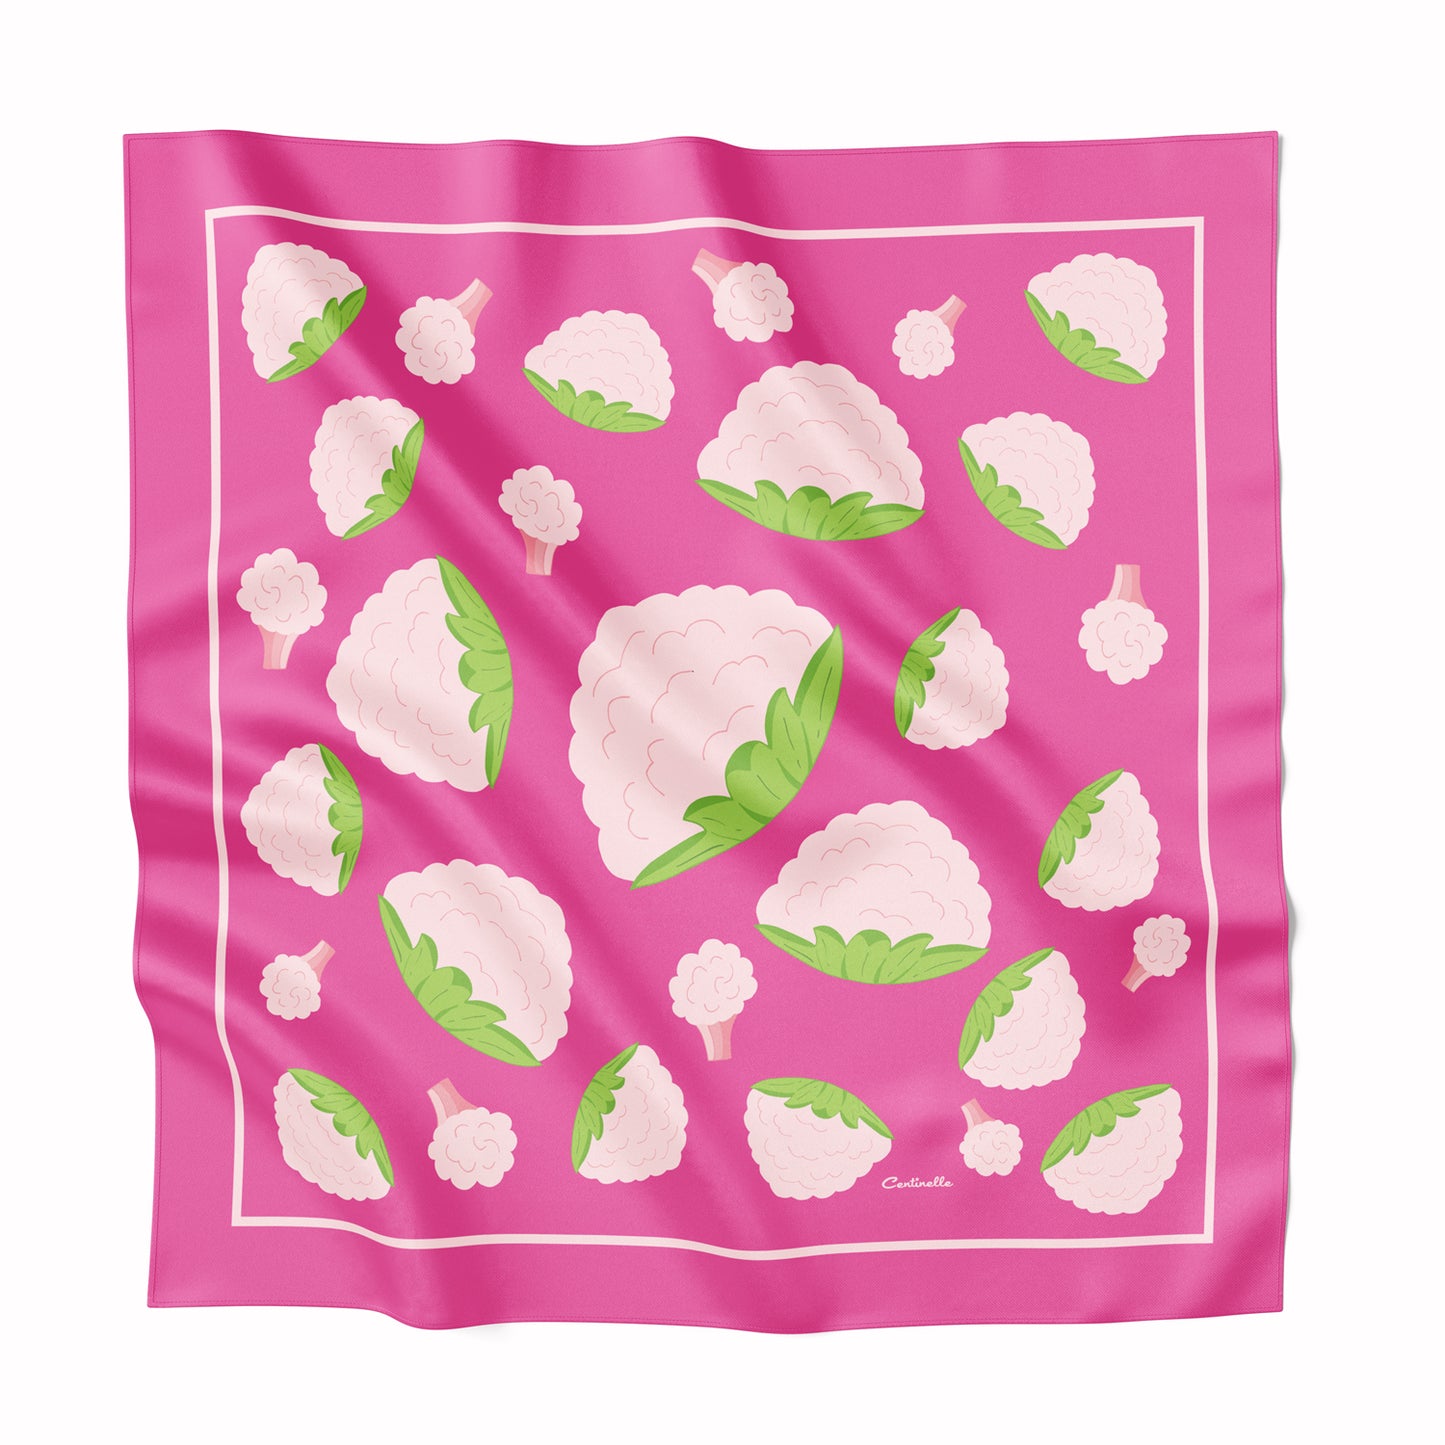 Cauliflower on a hot pink silk scarf.